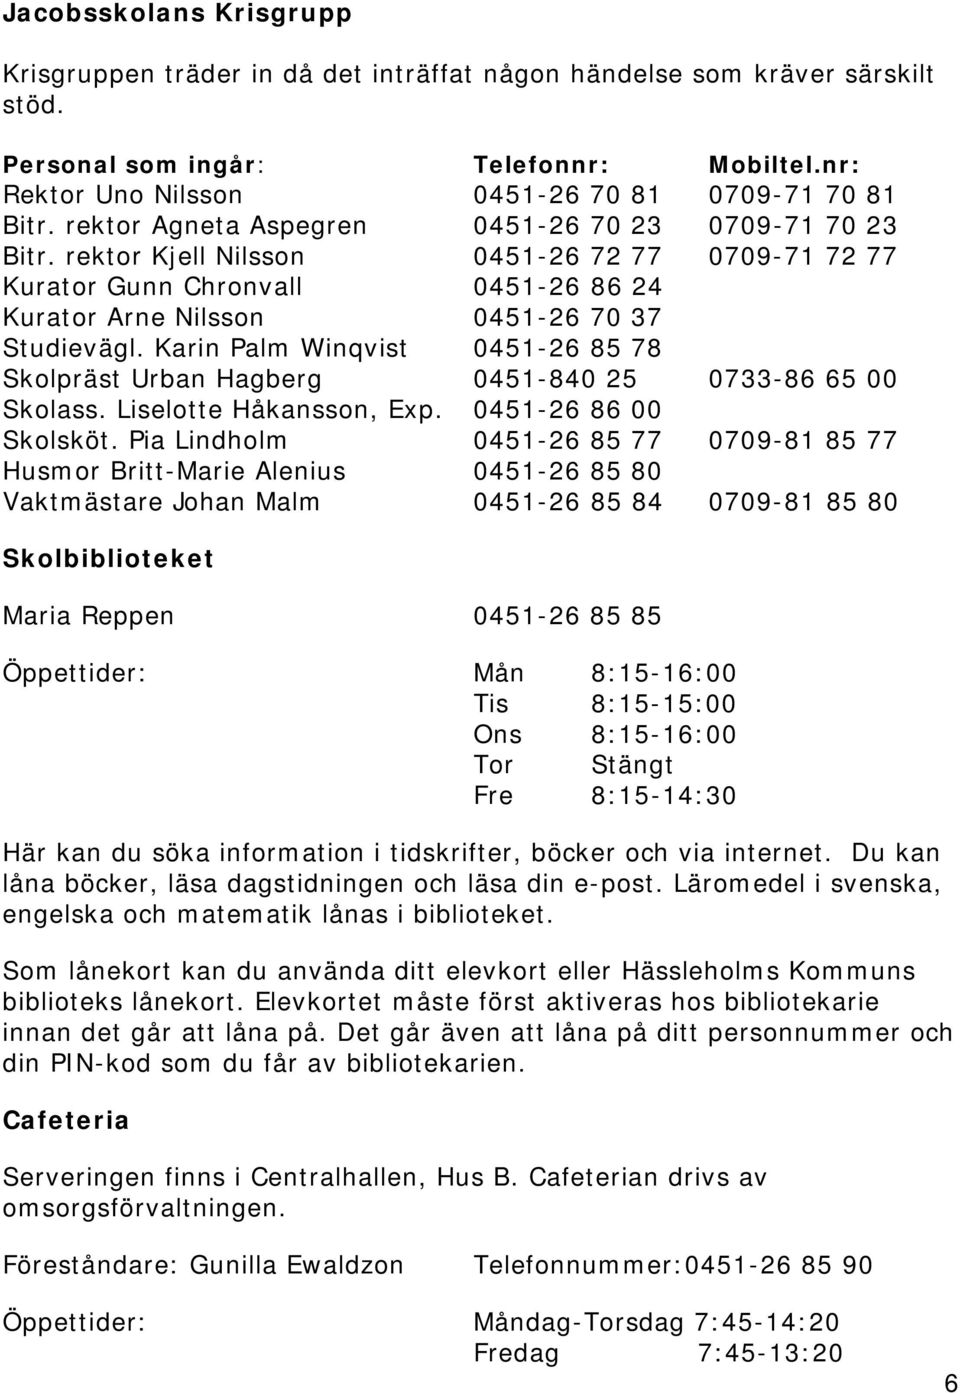 Karin Palm Winqvist 0451-26 85 78 Skolpräst Urban Hagberg 0451-840 25 0733-86 65 00 Skolass. Liselotte Håkansson, Exp. 0451-26 86 00 Skolsköt.